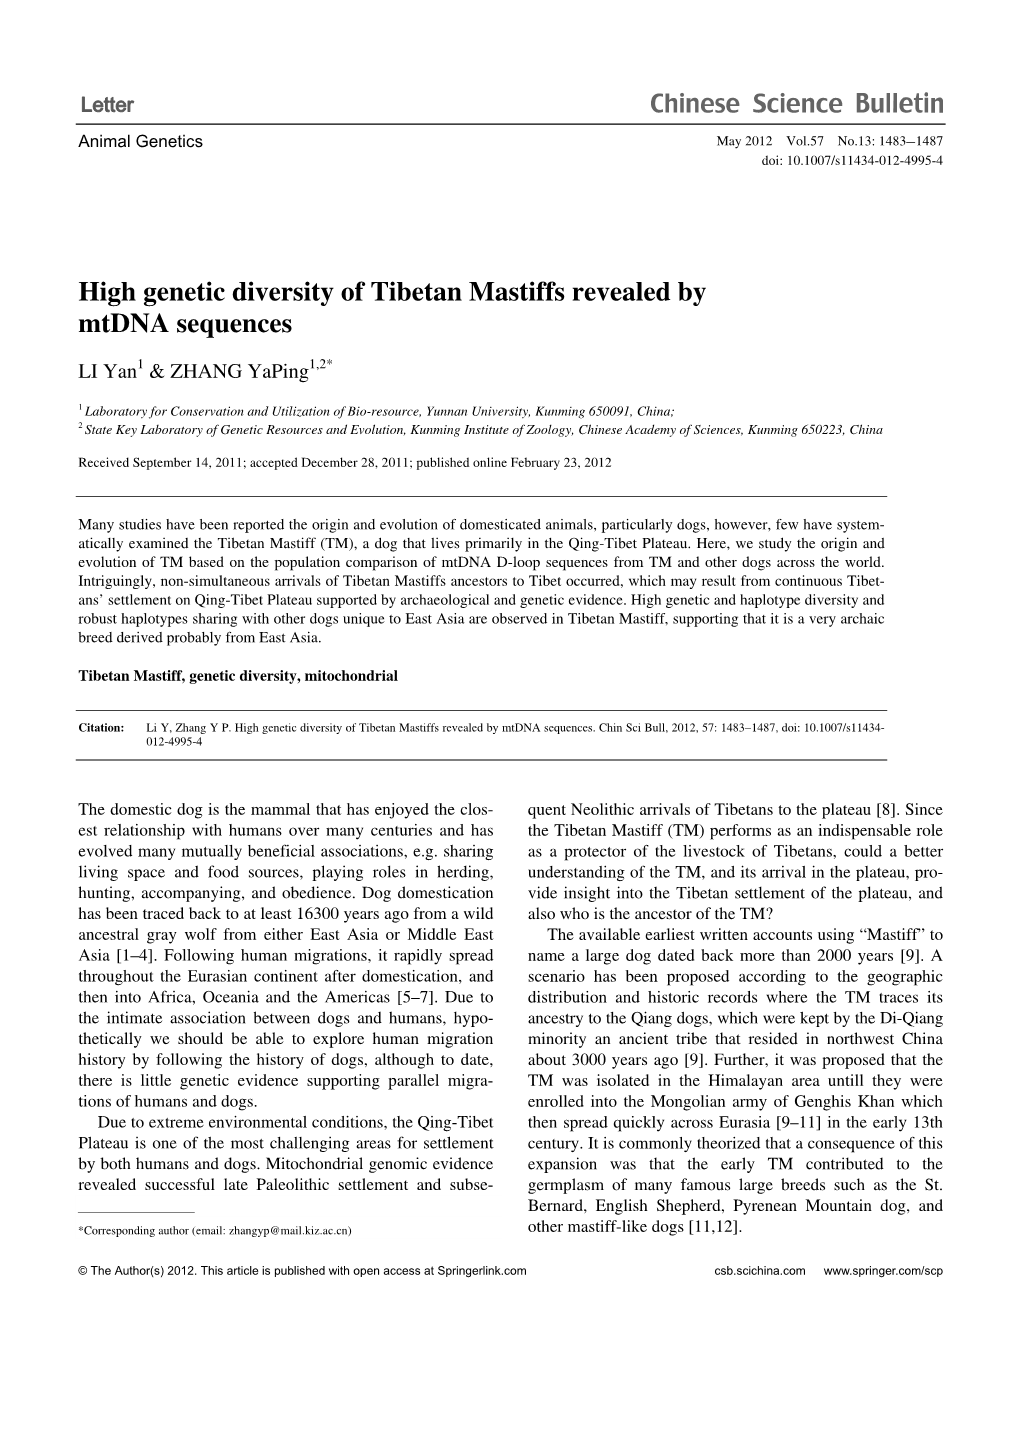 High Genetic Diversity of Tibetan Mastiffs Revealed by Mtdna Sequences